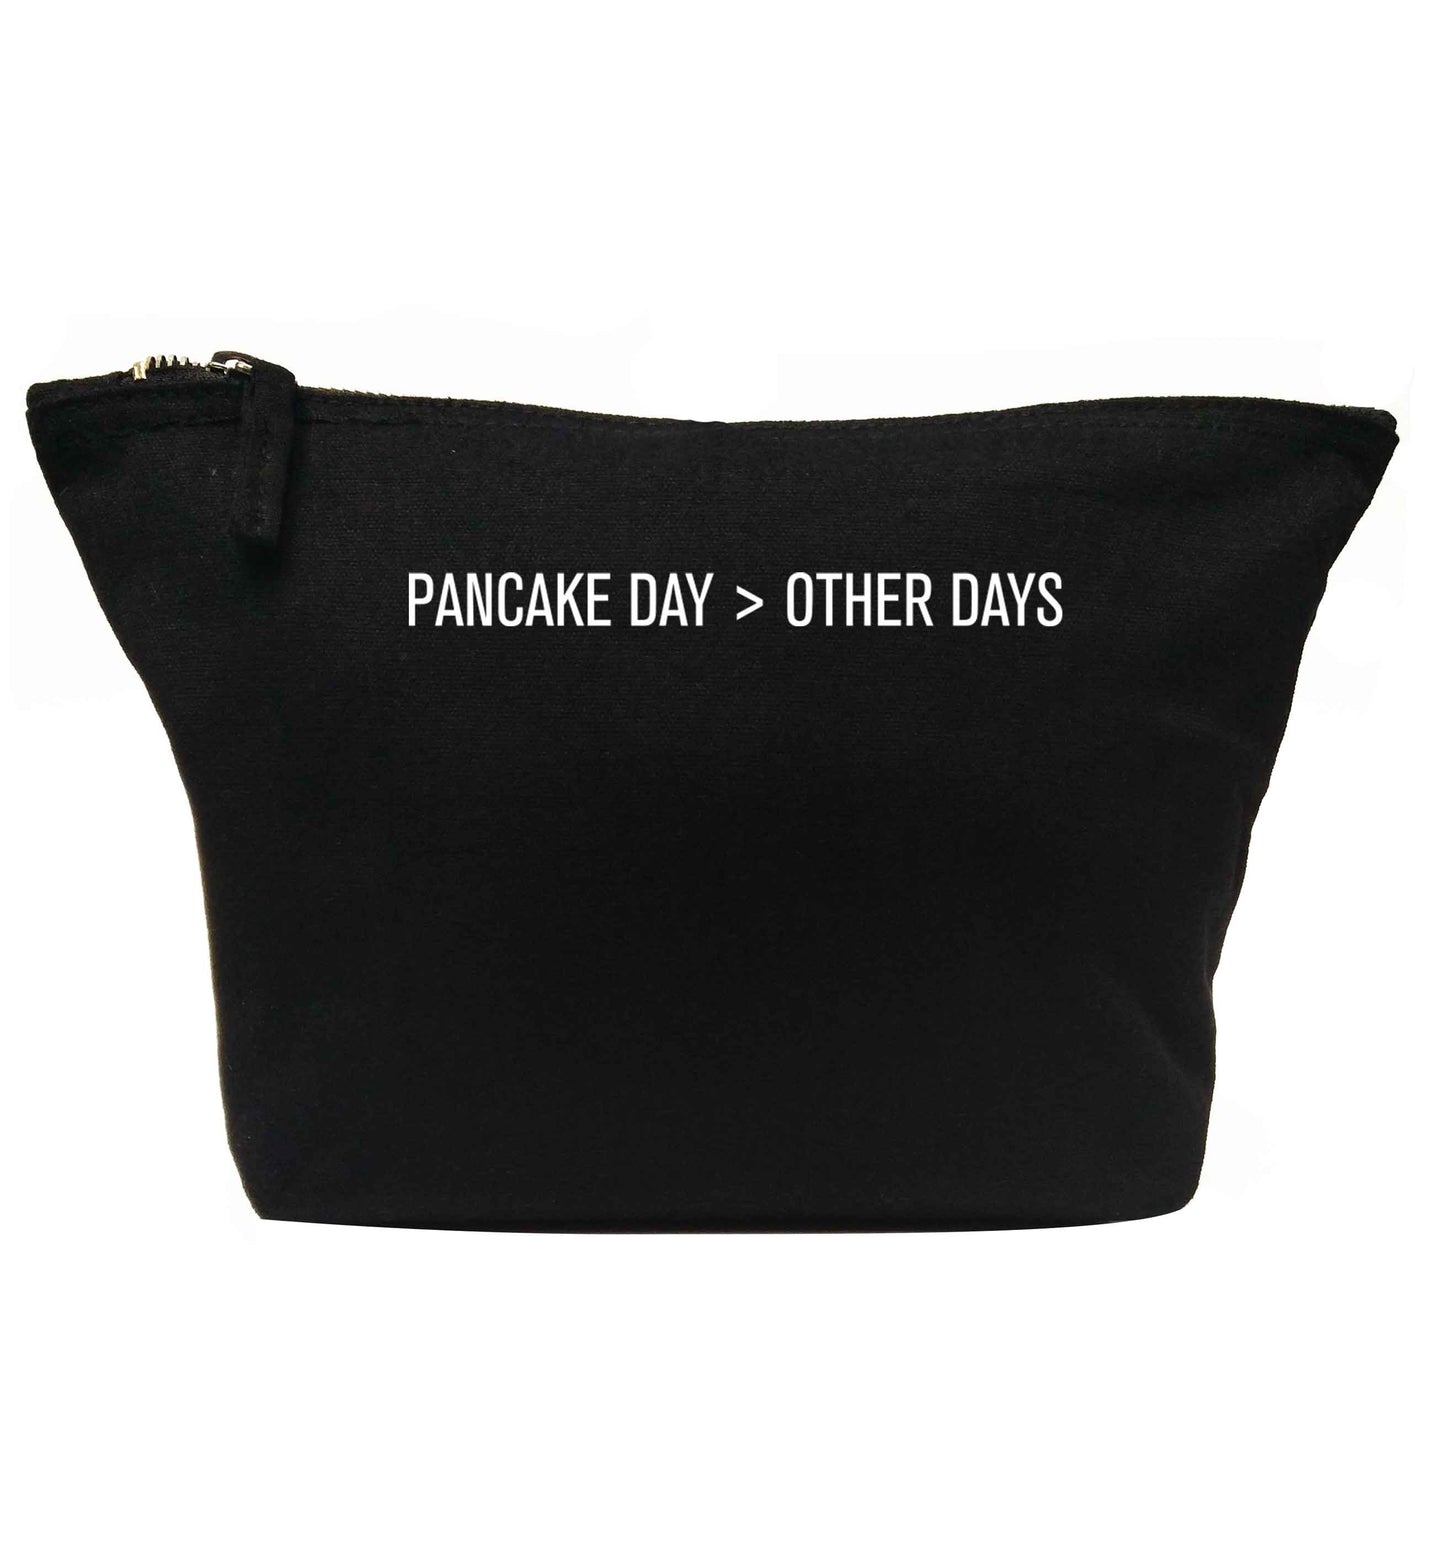 Pancake day > other days | Makeup / wash bag